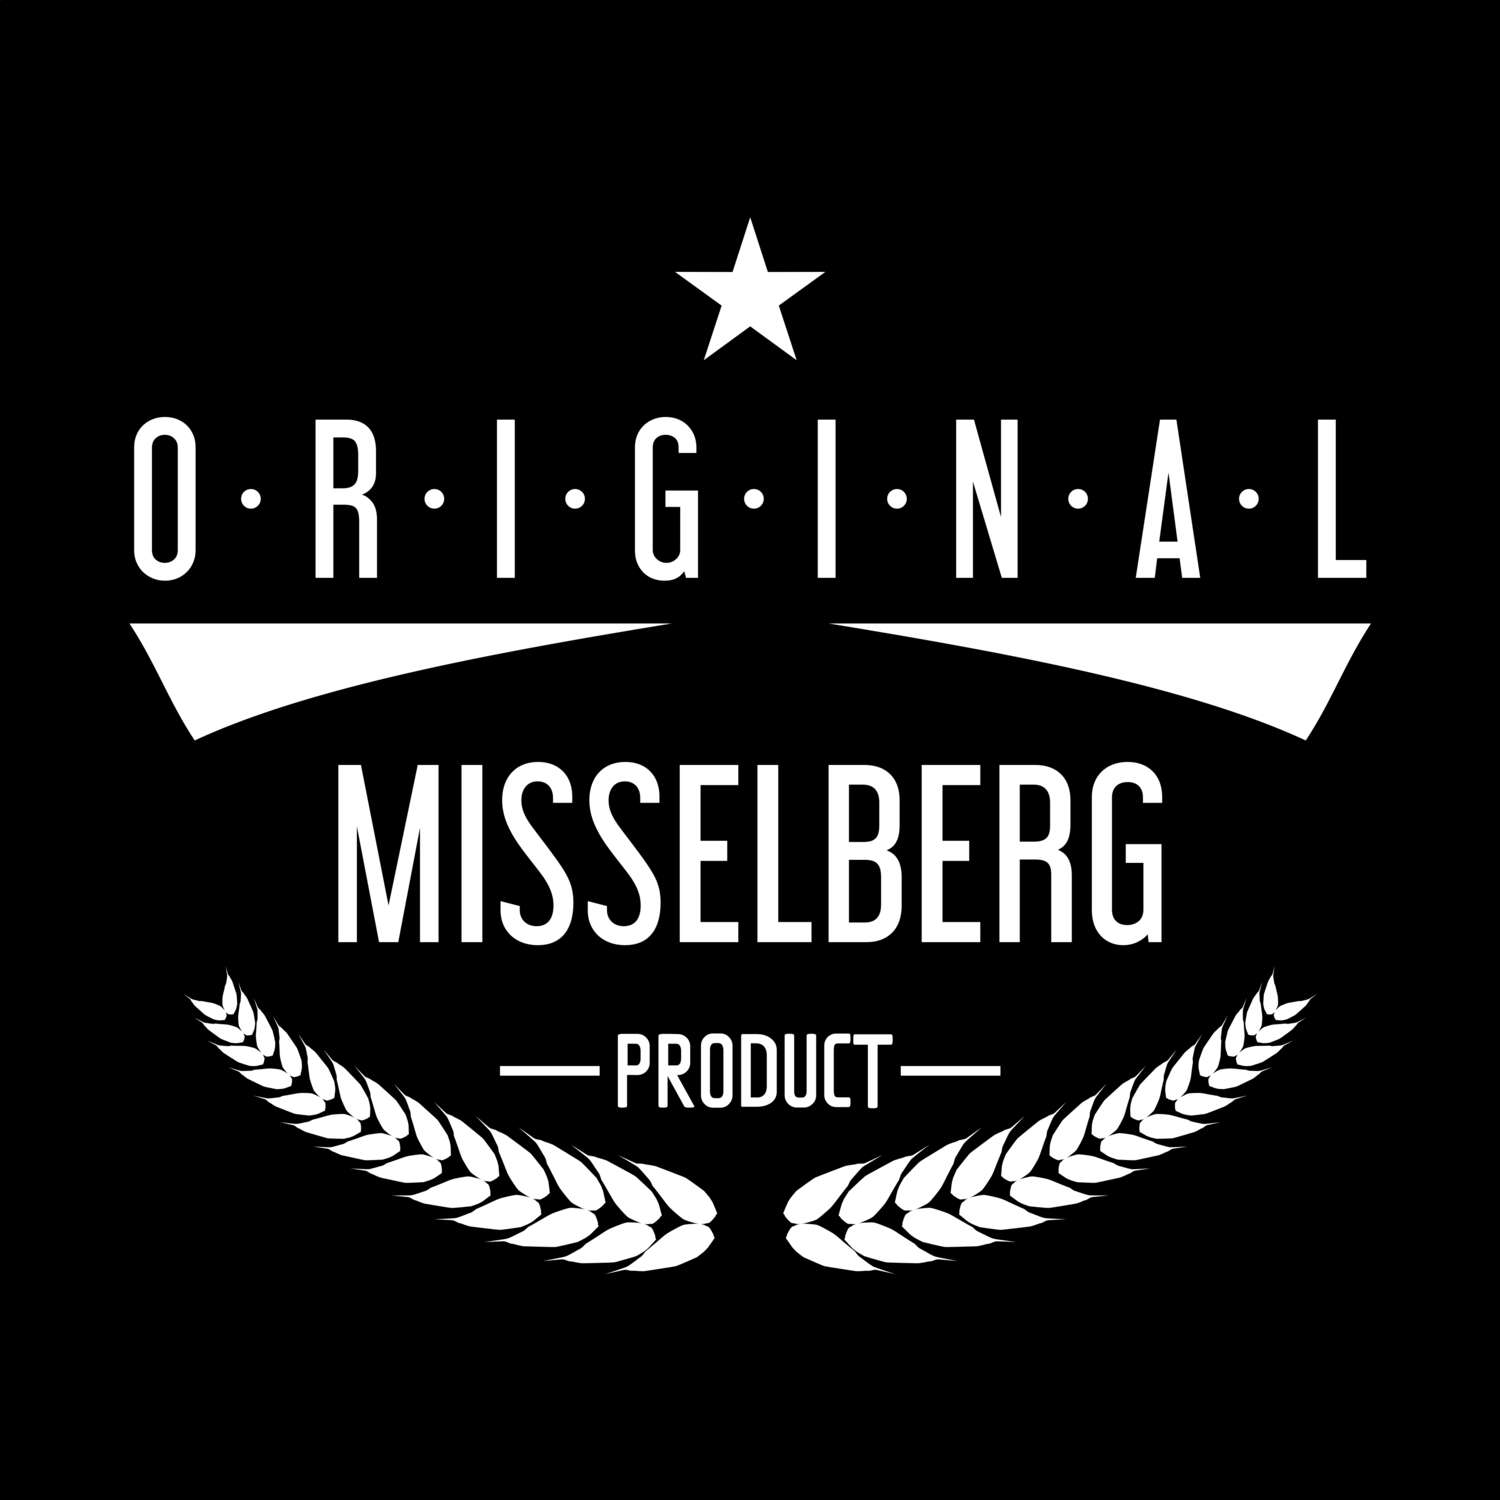 Misselberg T-Shirt »Original Product«